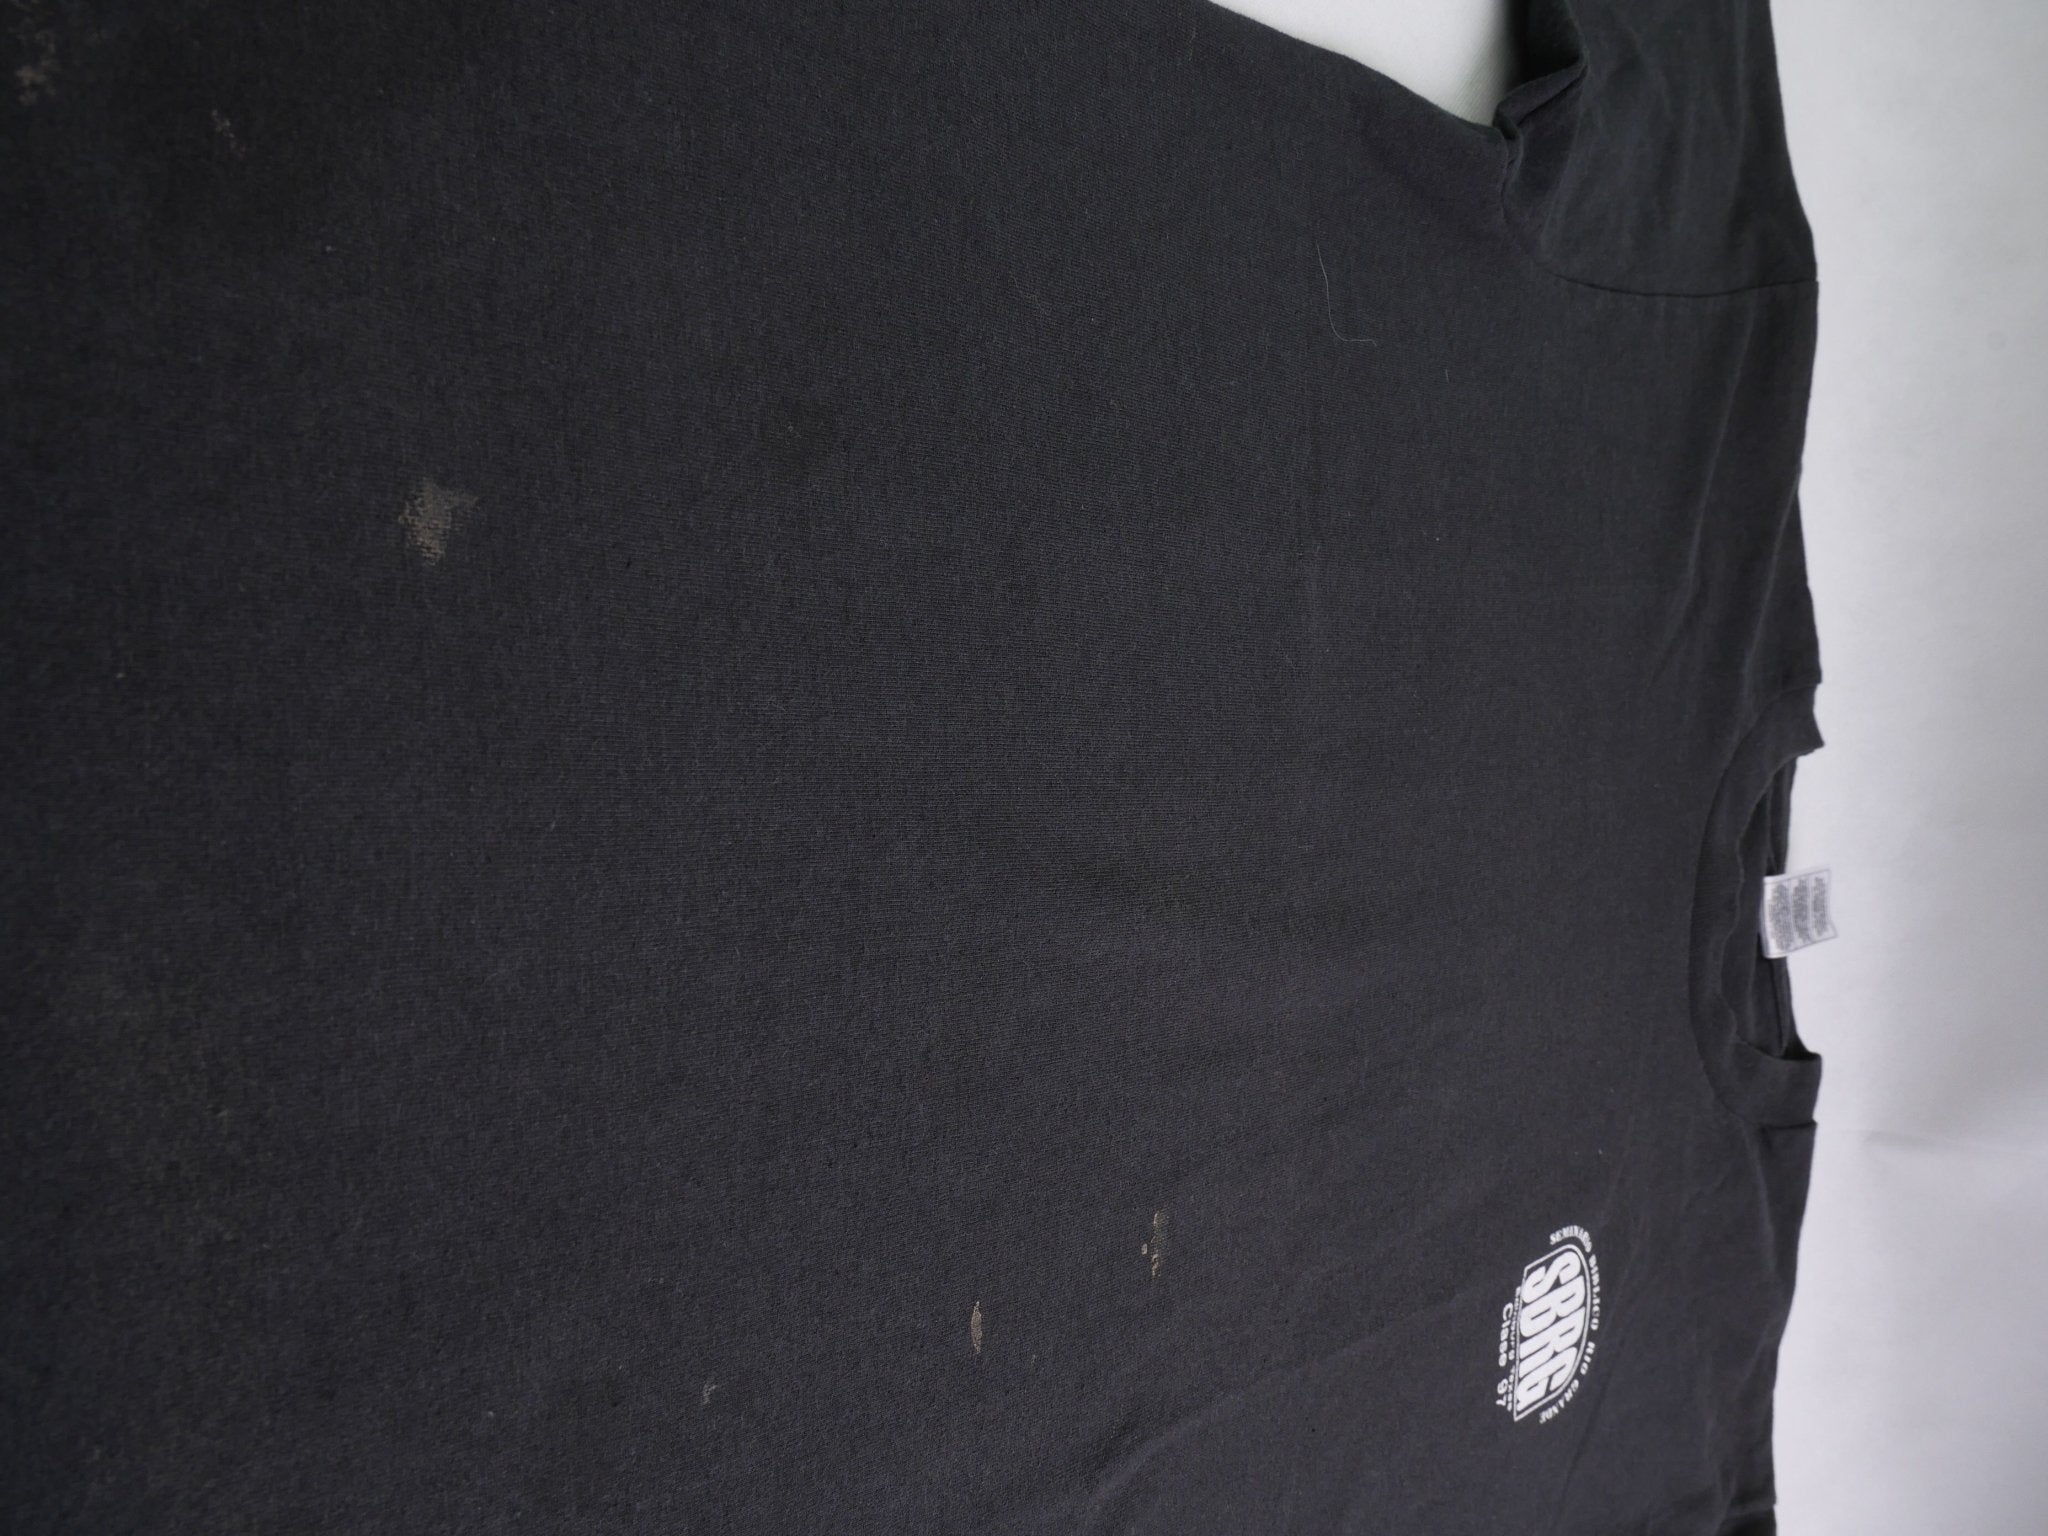 printed SBRG black Shirt - Peeces